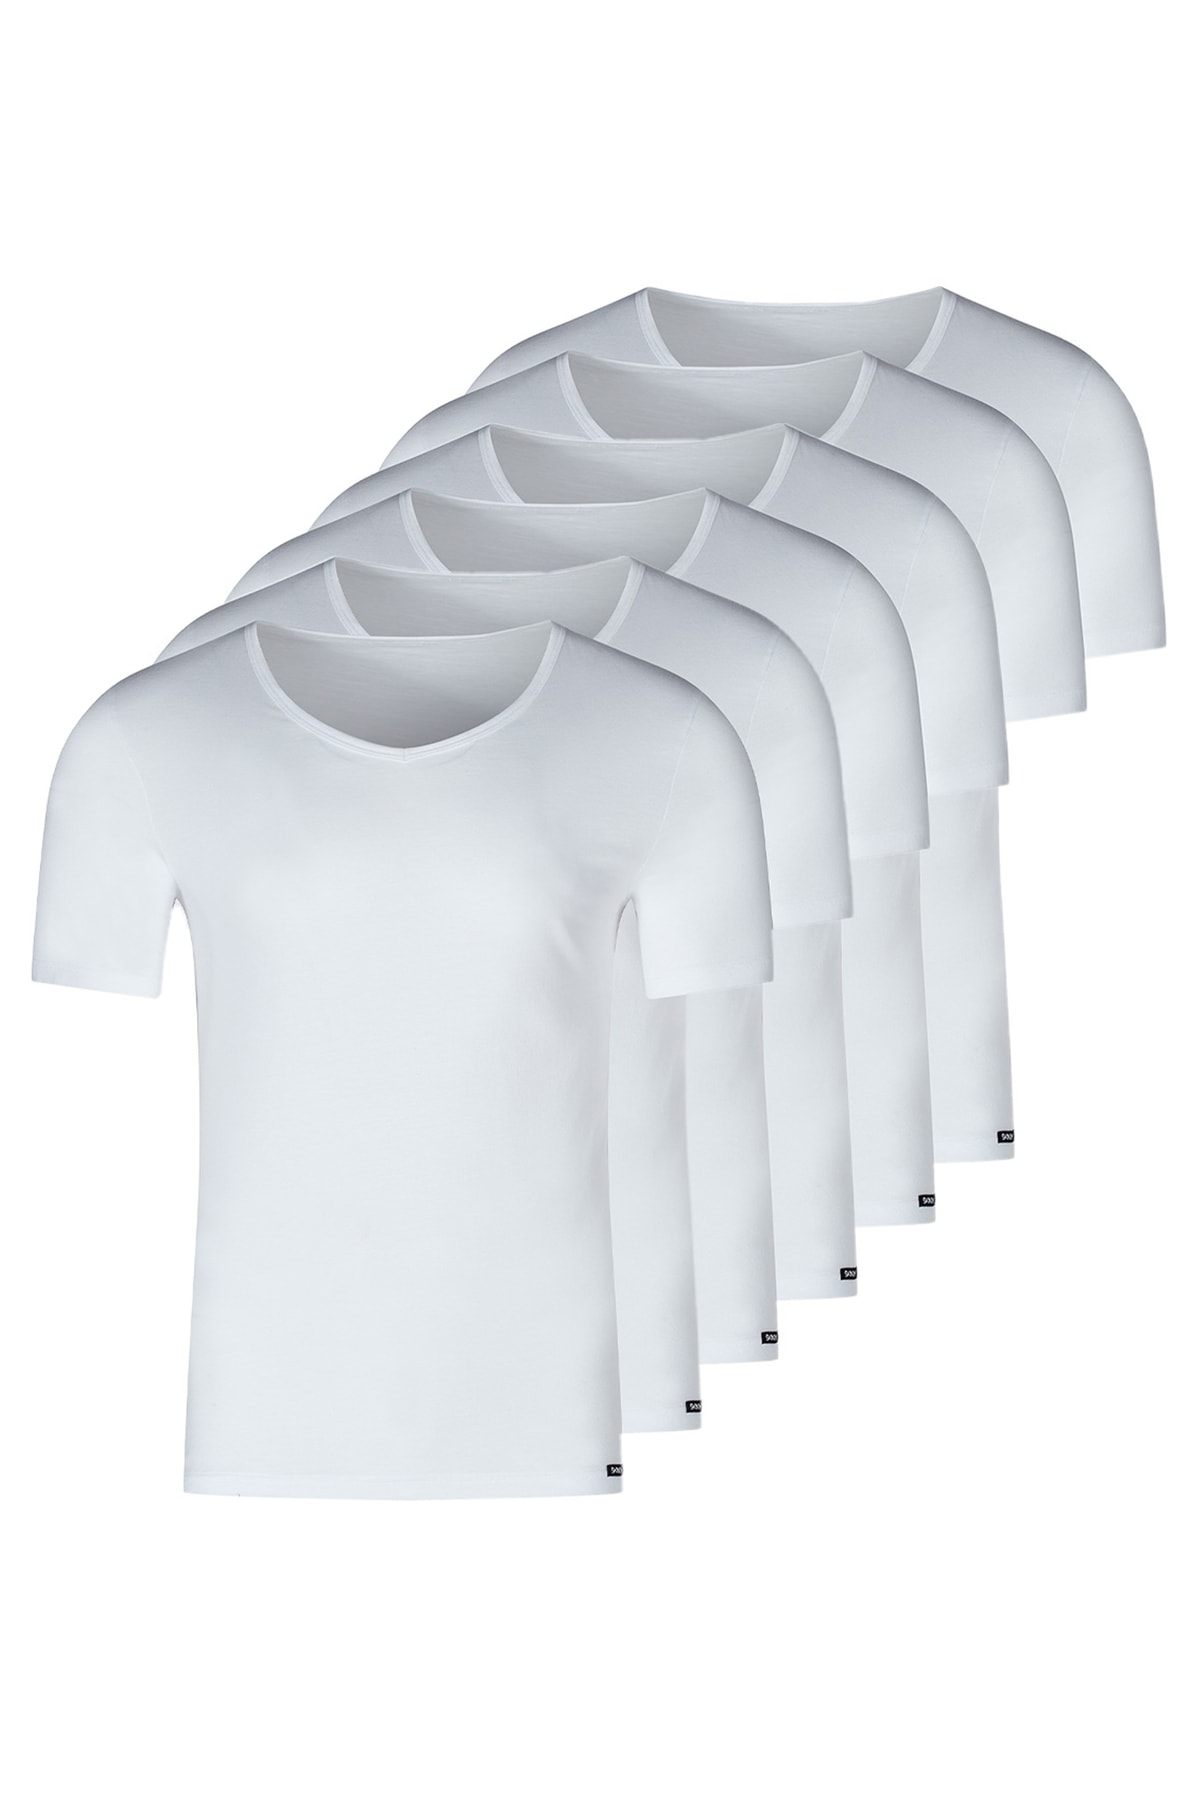 Skiny Unterhemd Weiß Regular Fit Fast ausverkauft